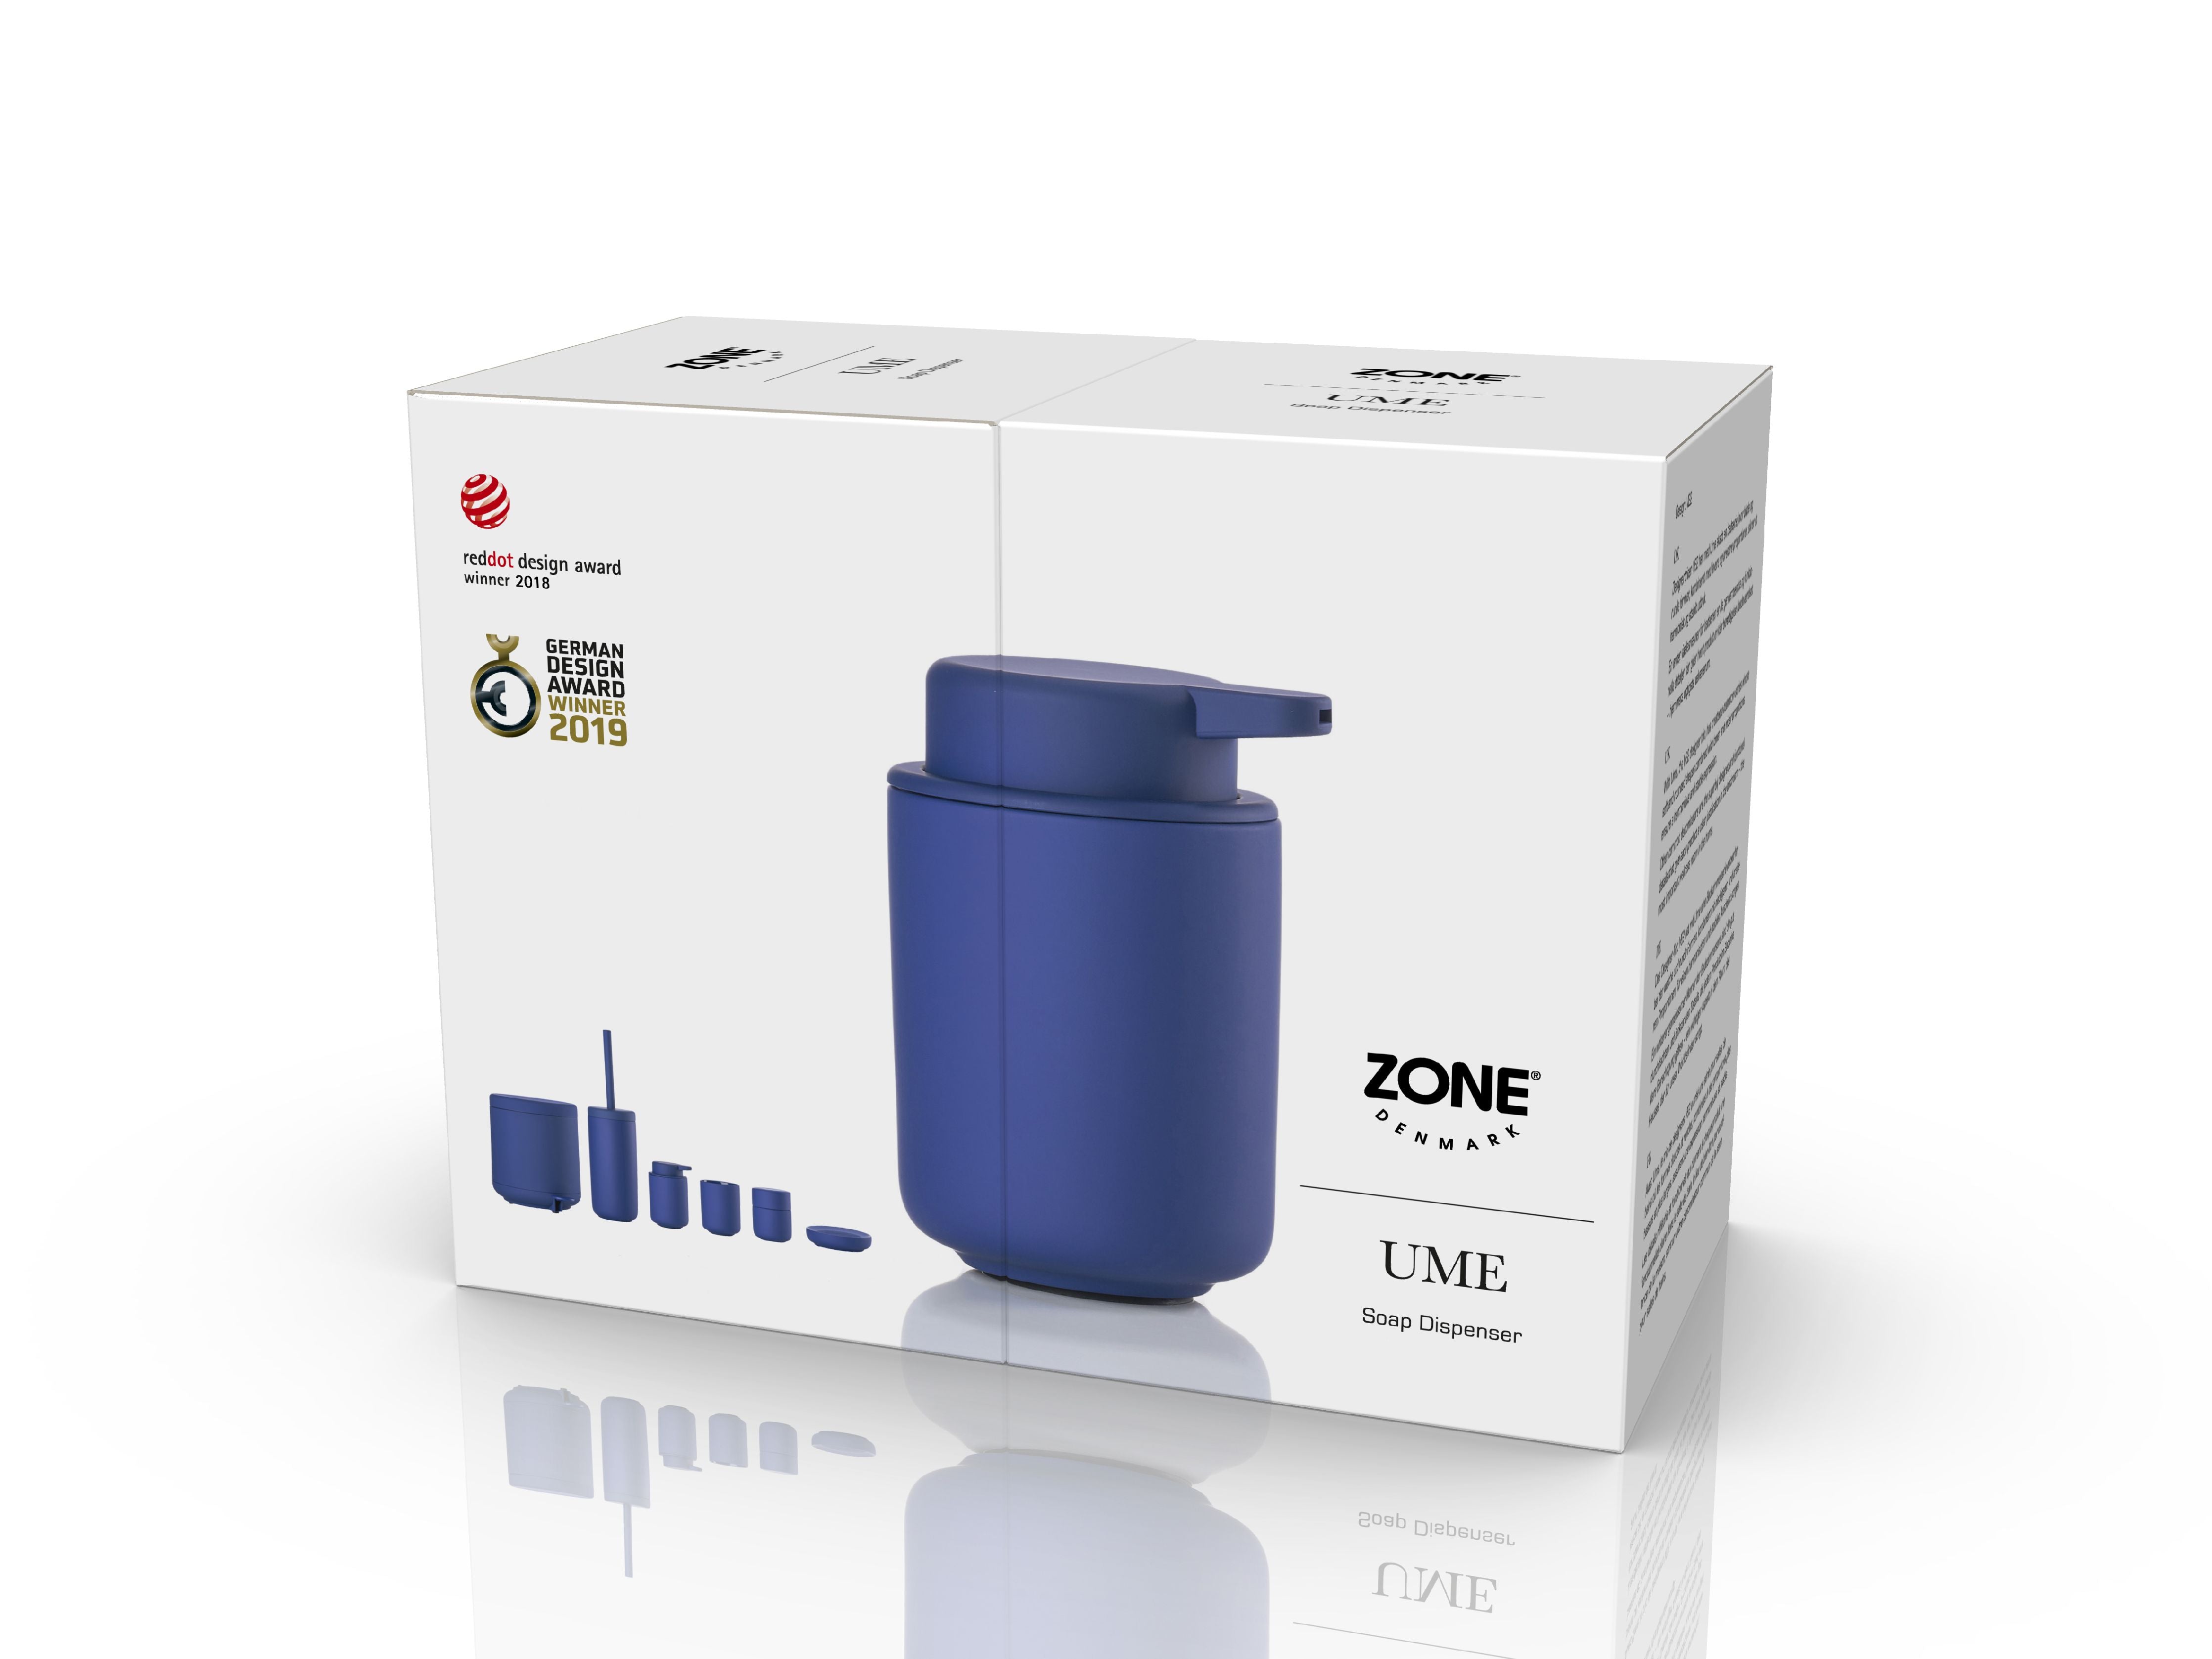 Zone Denemark Ume Soap Dispensateur 0,25 litre, Blue Indigo